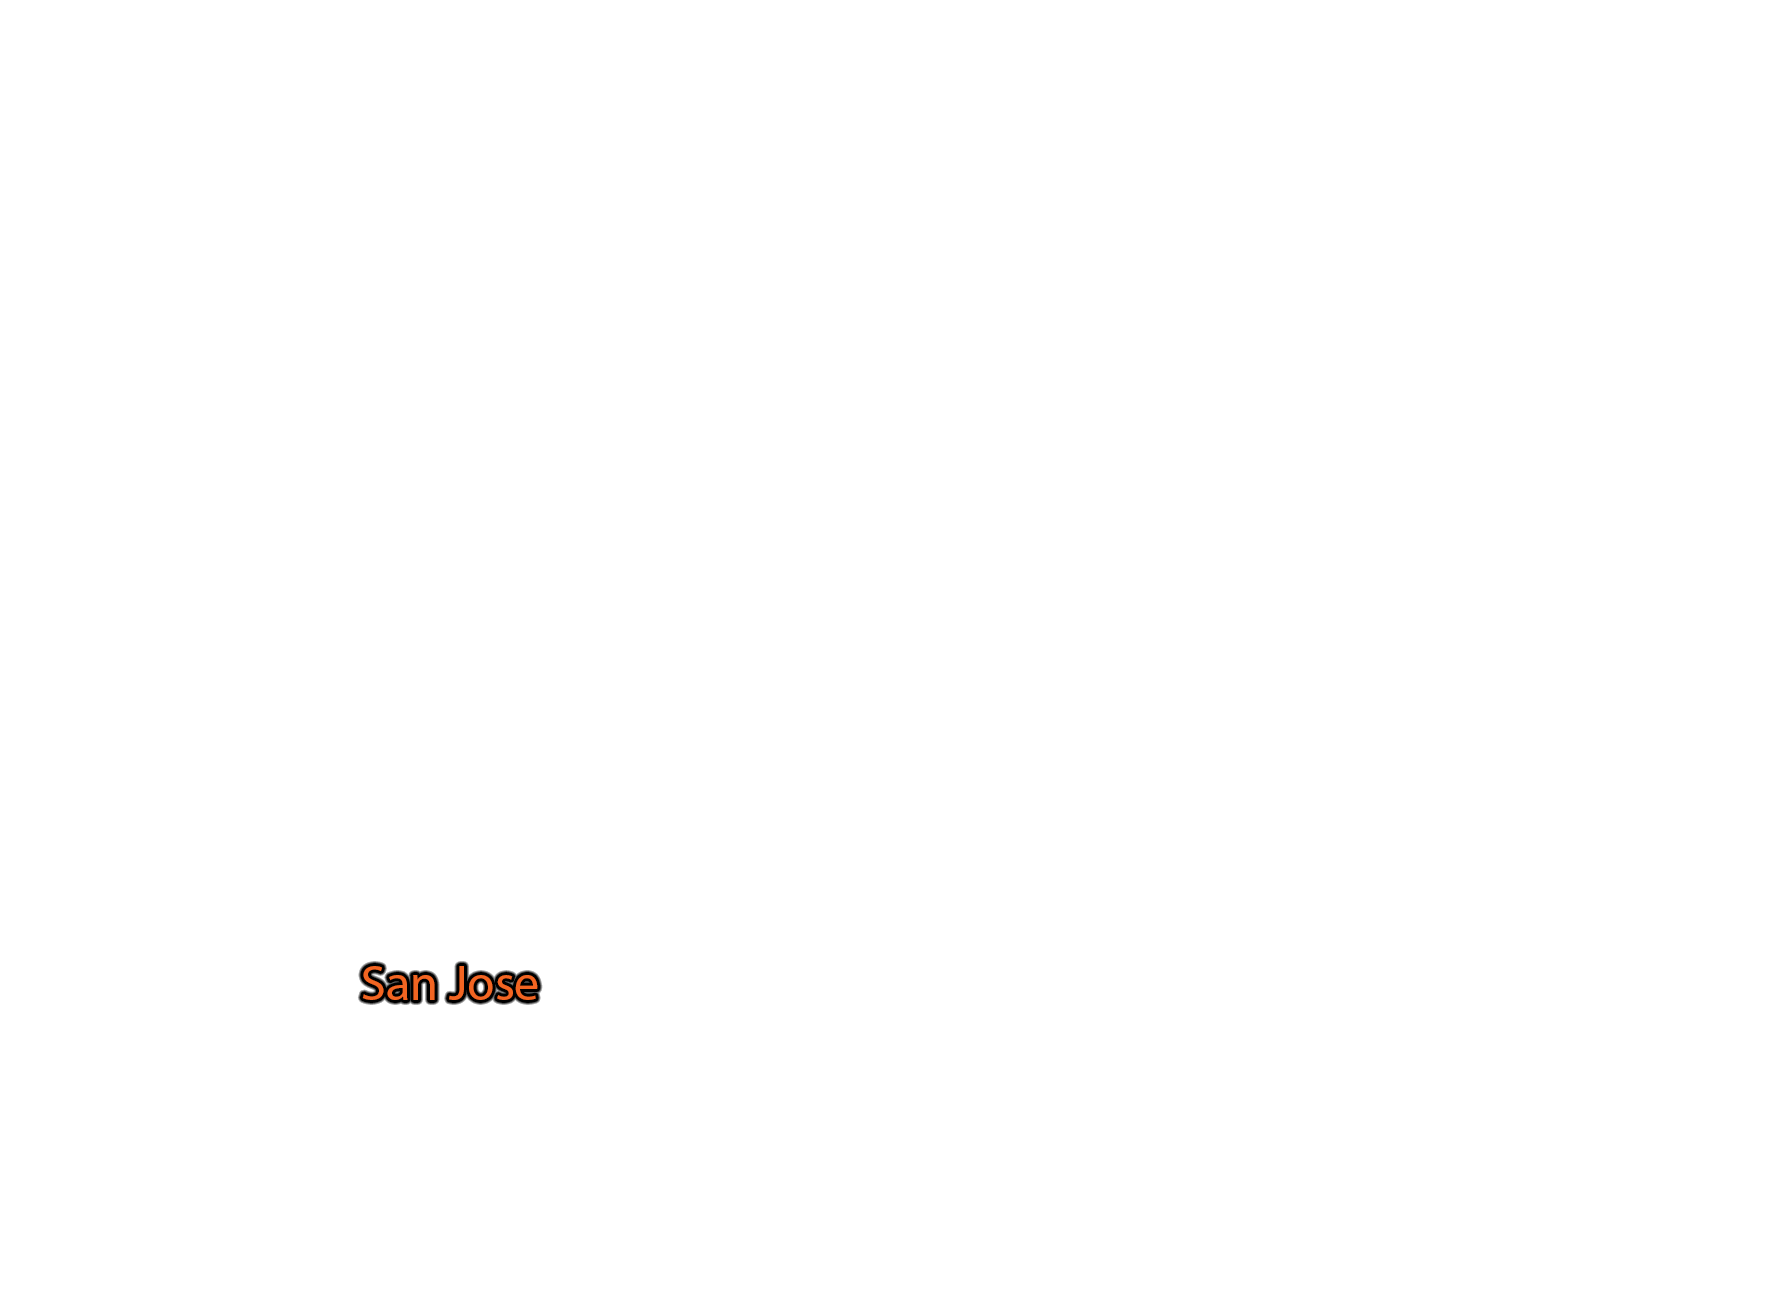 San-Jose label with glow